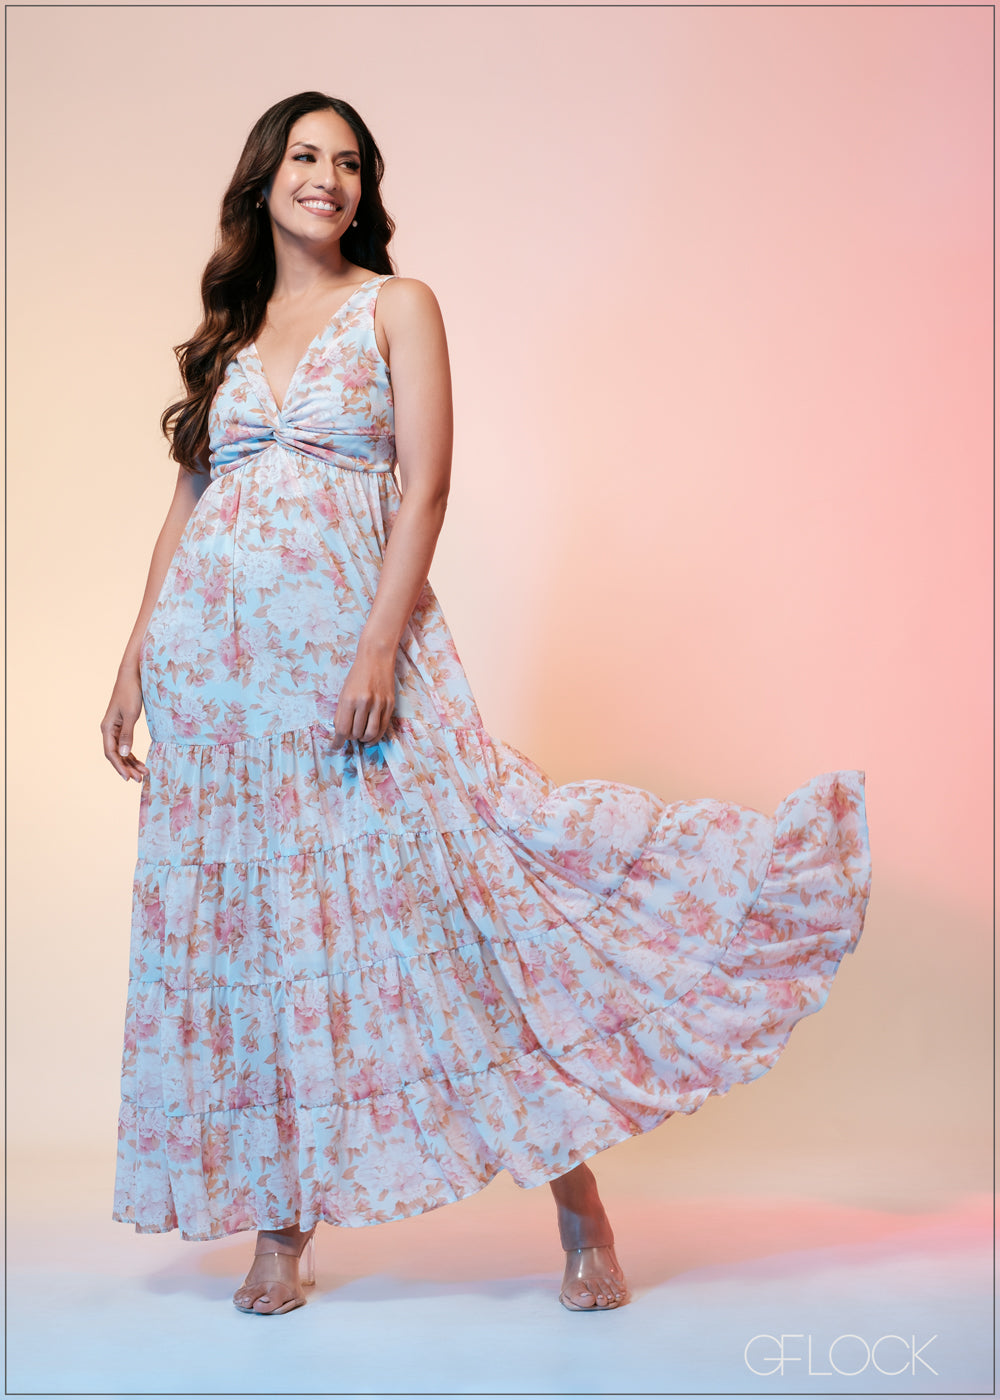 Floral Twist Detail Dress - 260523